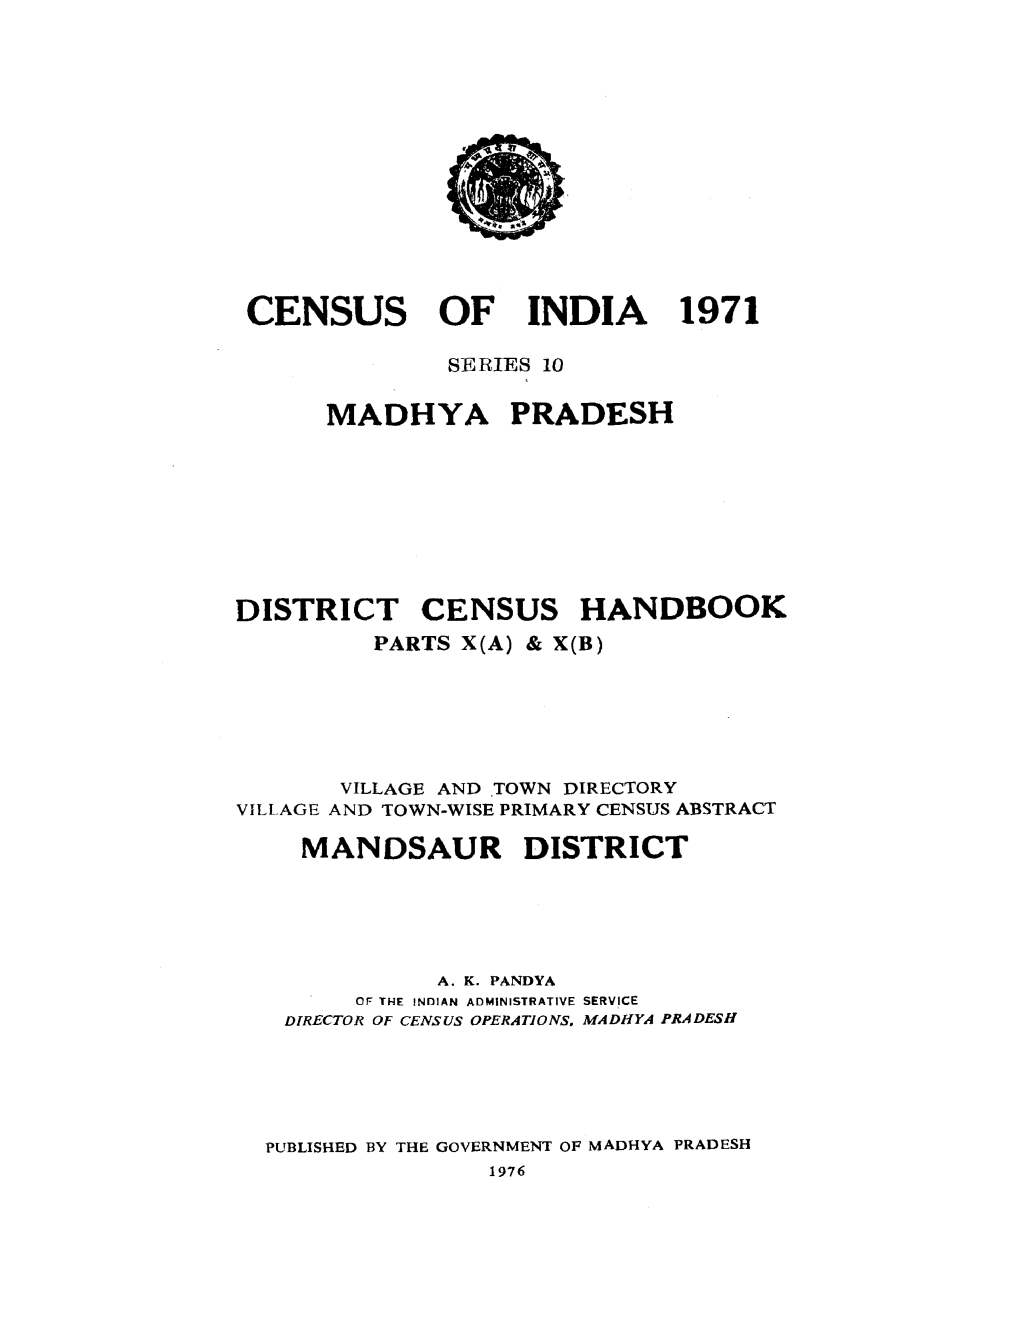 District Census Handbook, Mandsaur, Part X